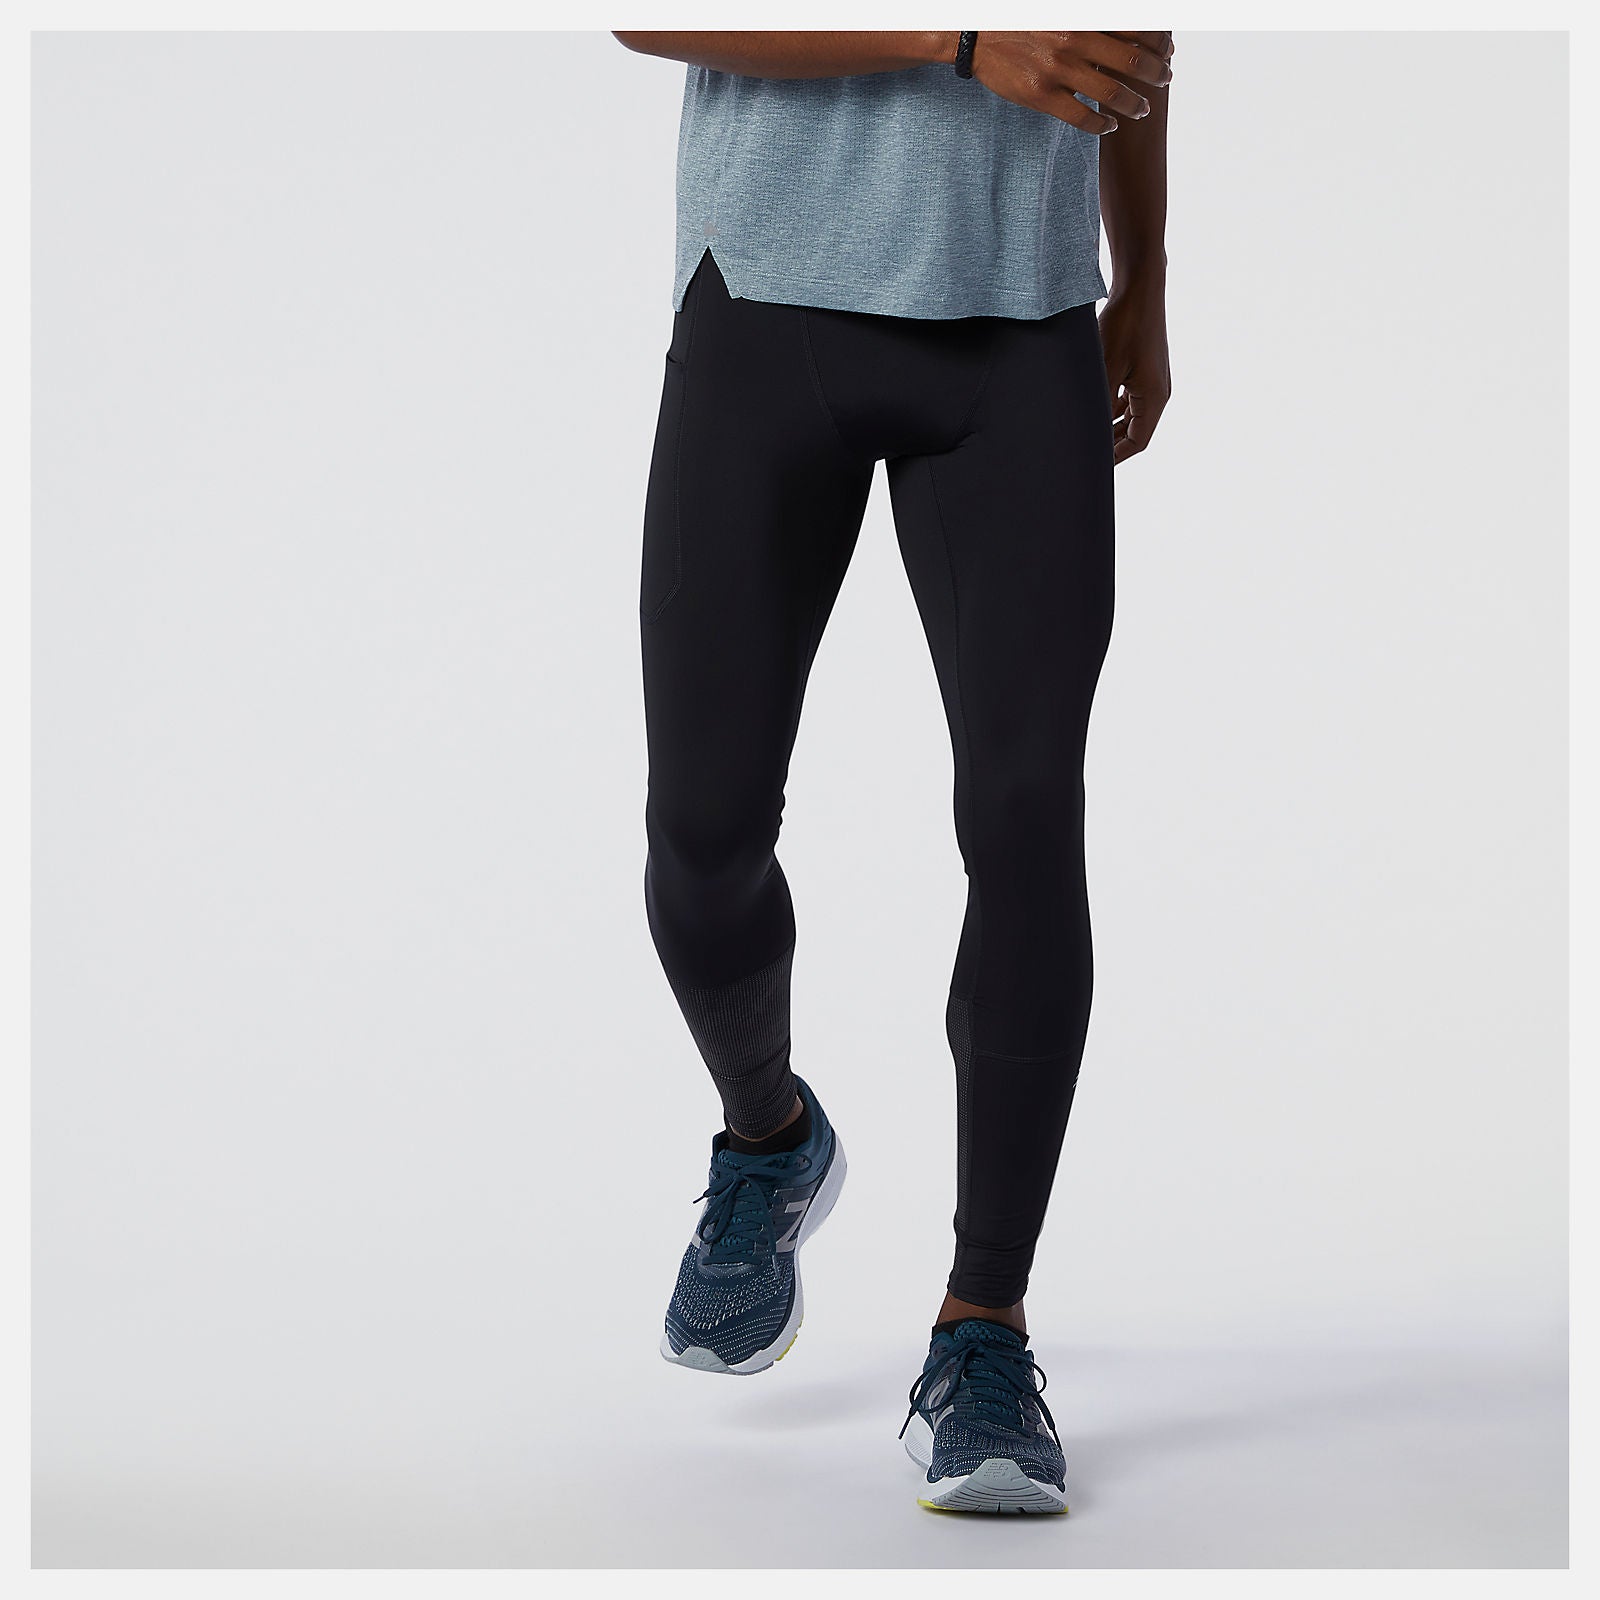  K-Men Men's Black Transparent Trousers Long John Pants Muscle Tights  Leggings M : Clothing, Shoes & Jewelry